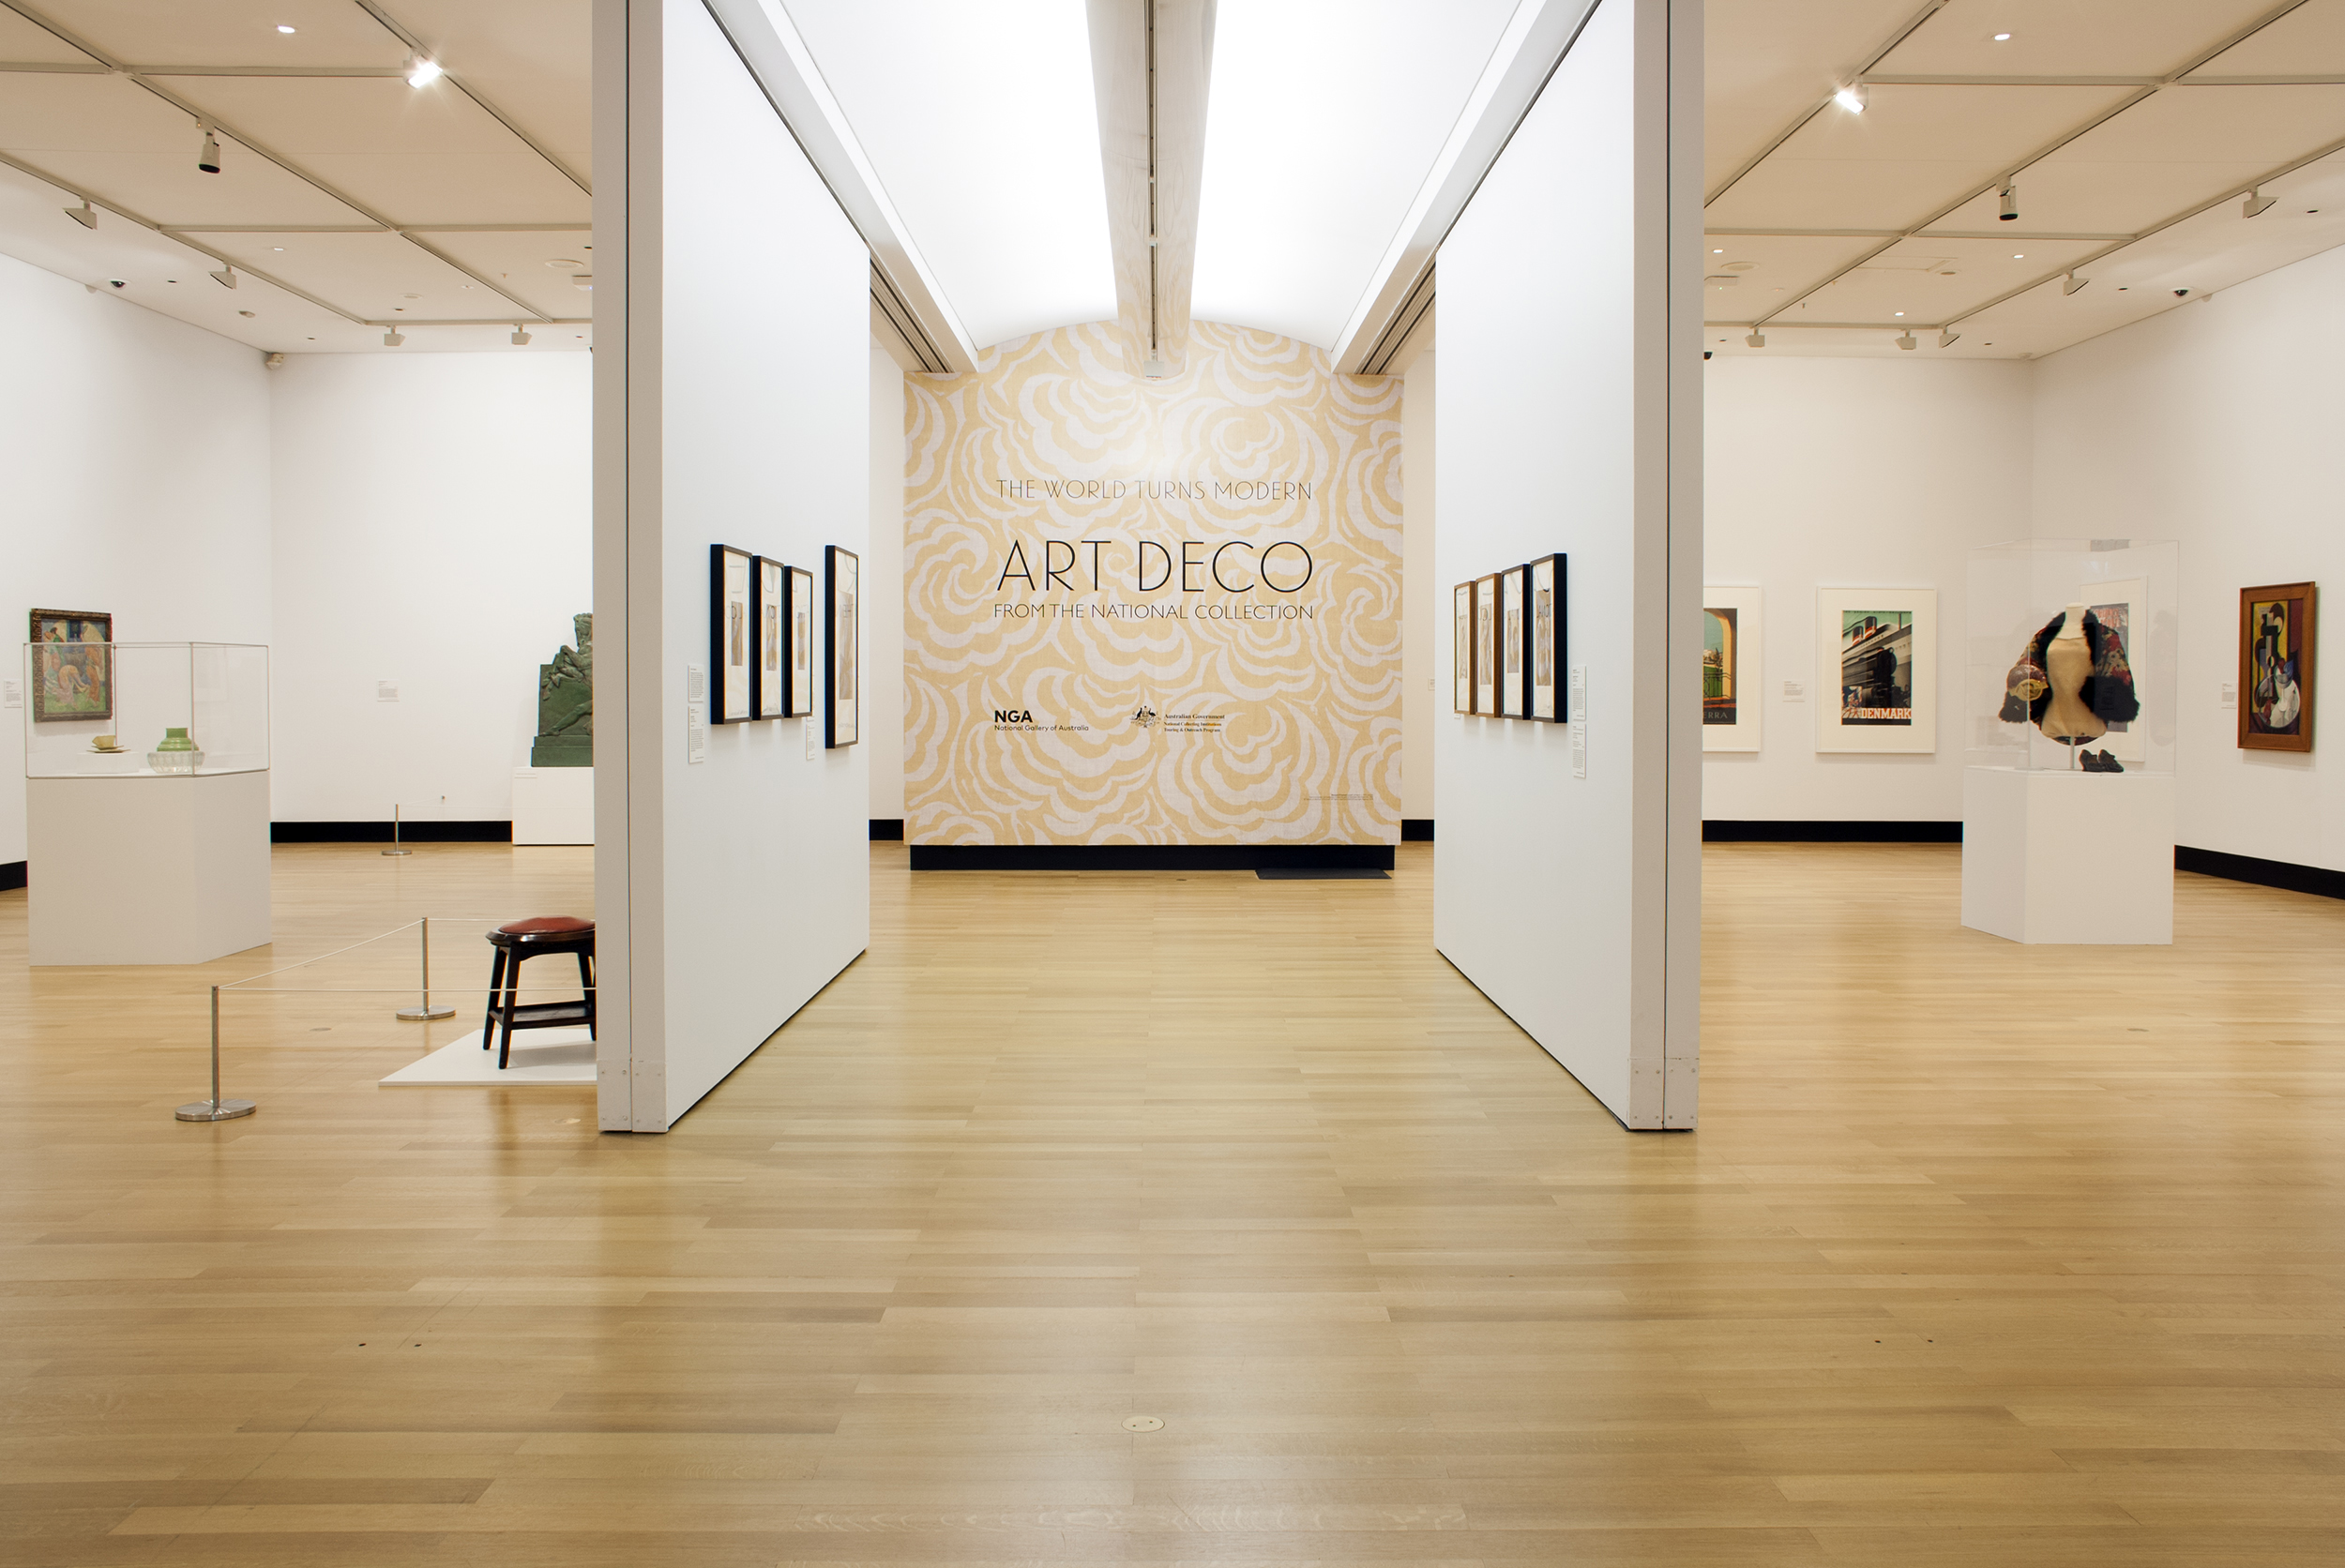 An Art Deco exhibition at Ipswich Art Gallery